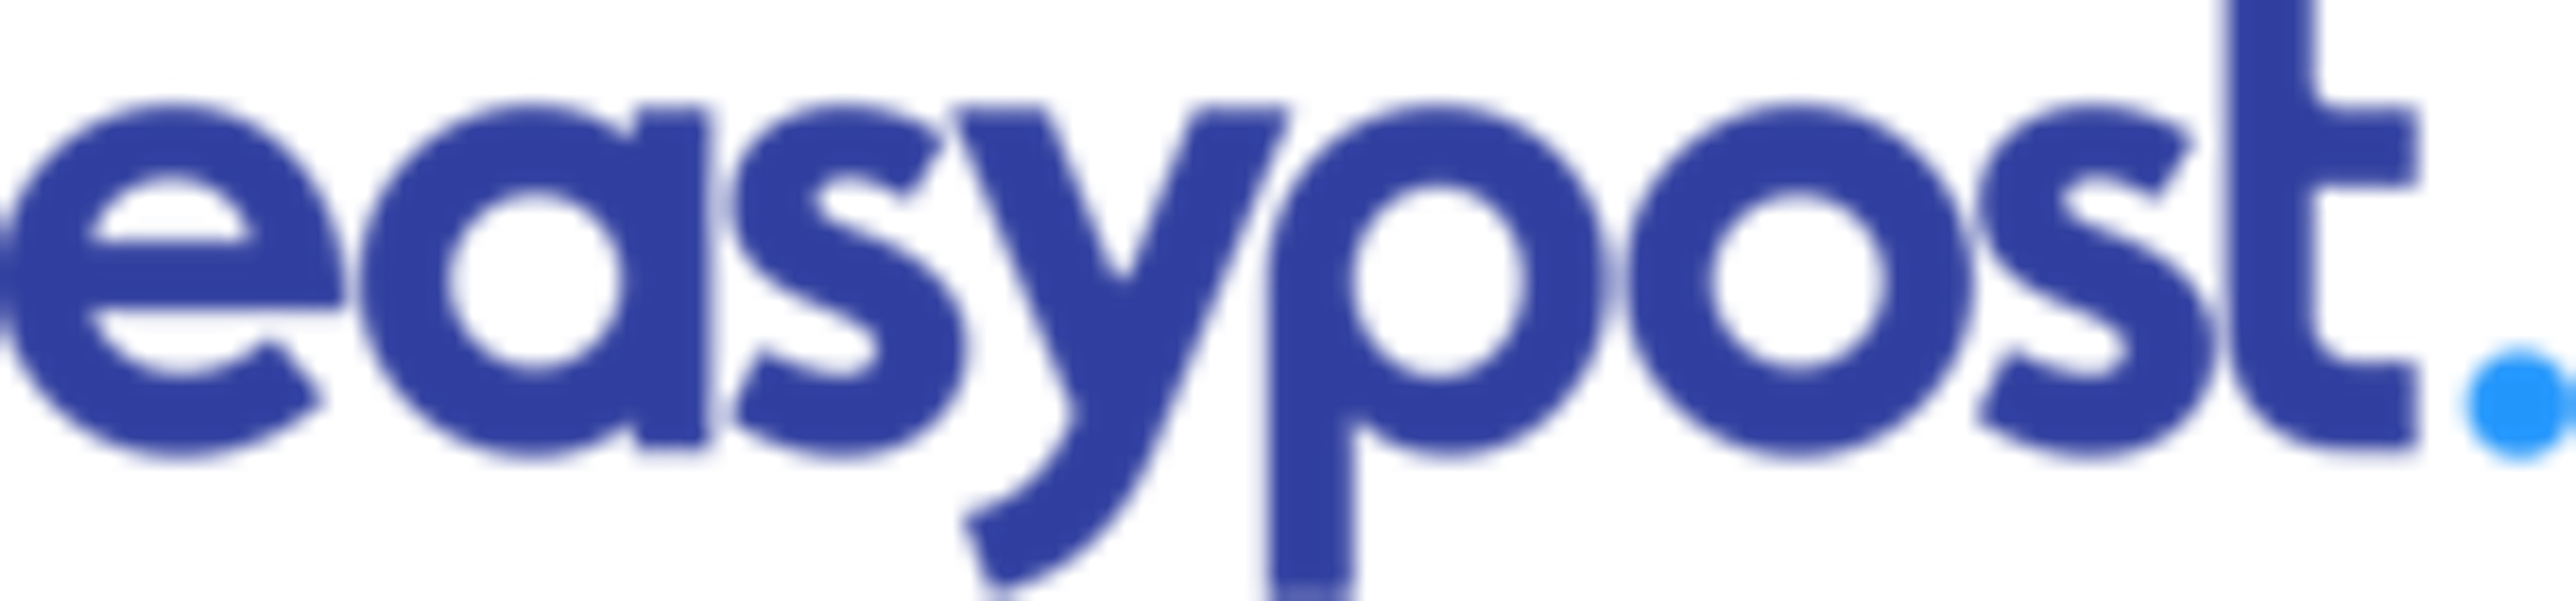 EasyPost Logo